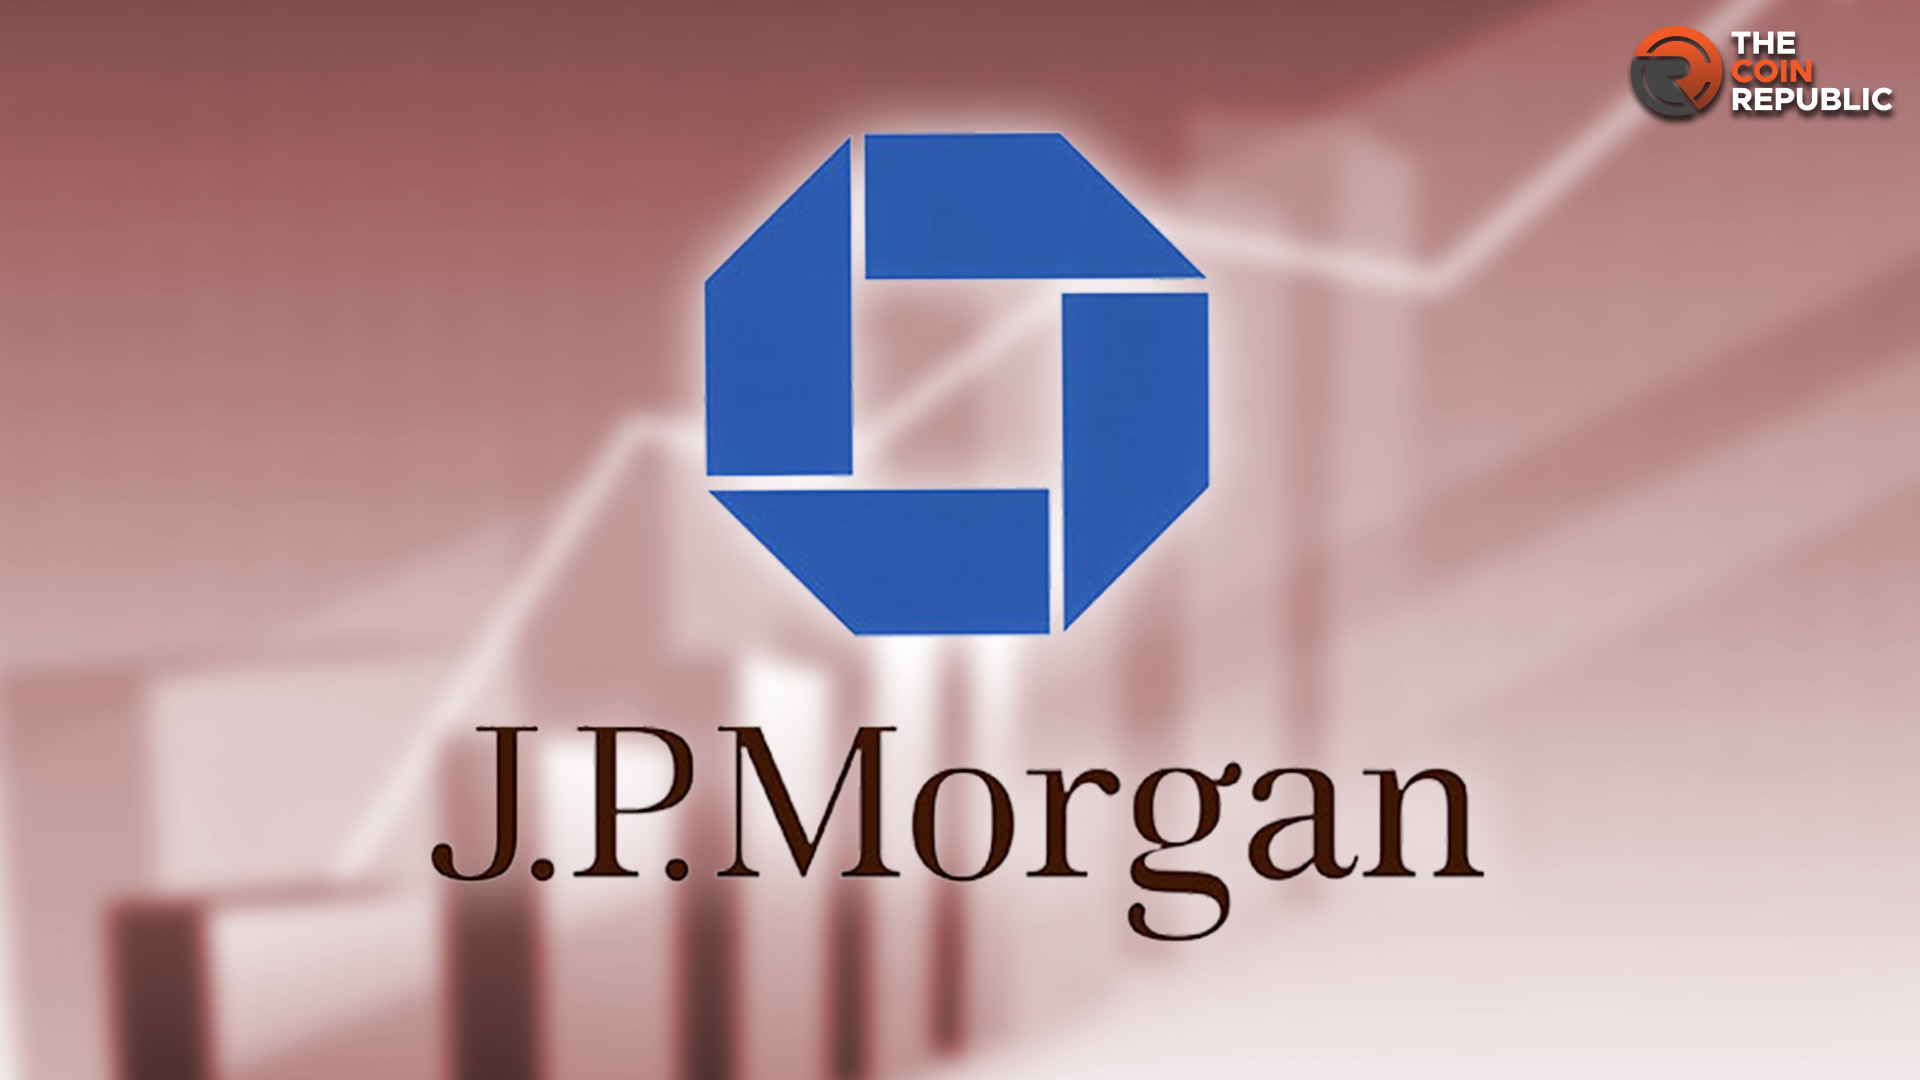 JPM Stock (NYSE: JPM) Price Near $150, Will It Rally Toward $200?